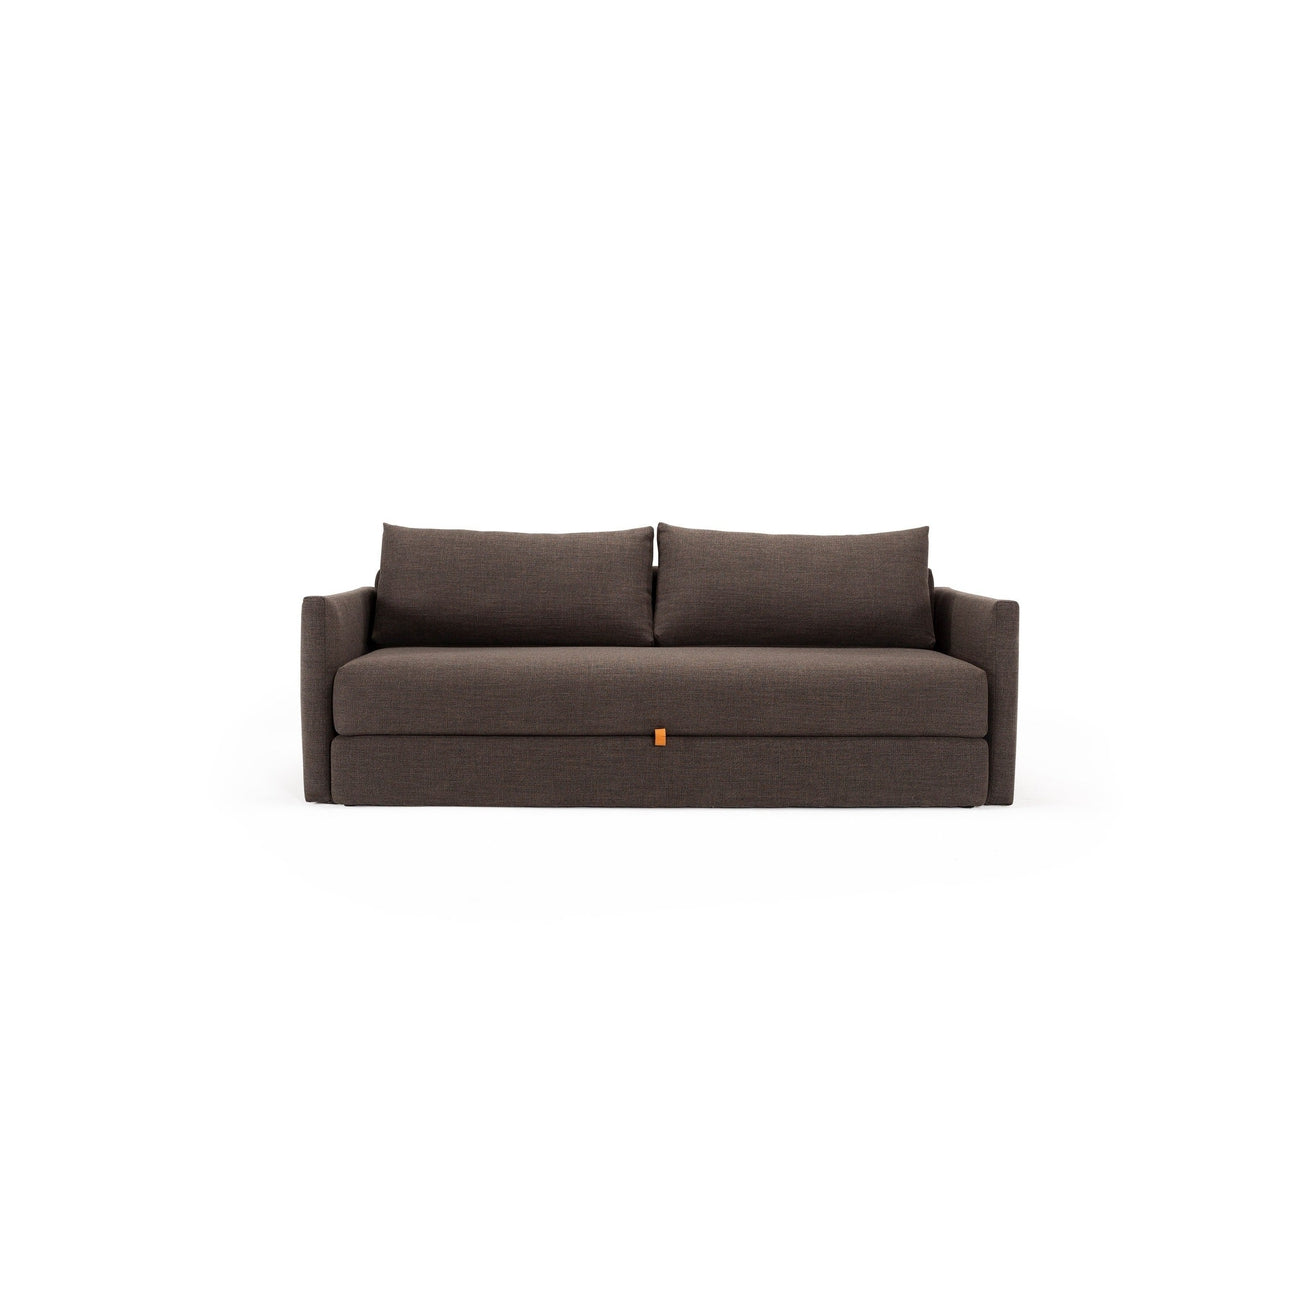 Tripi sleep sofa black legs-Innovation Living-INNO-94-543085578-03-2-Sofas-2-France and Son